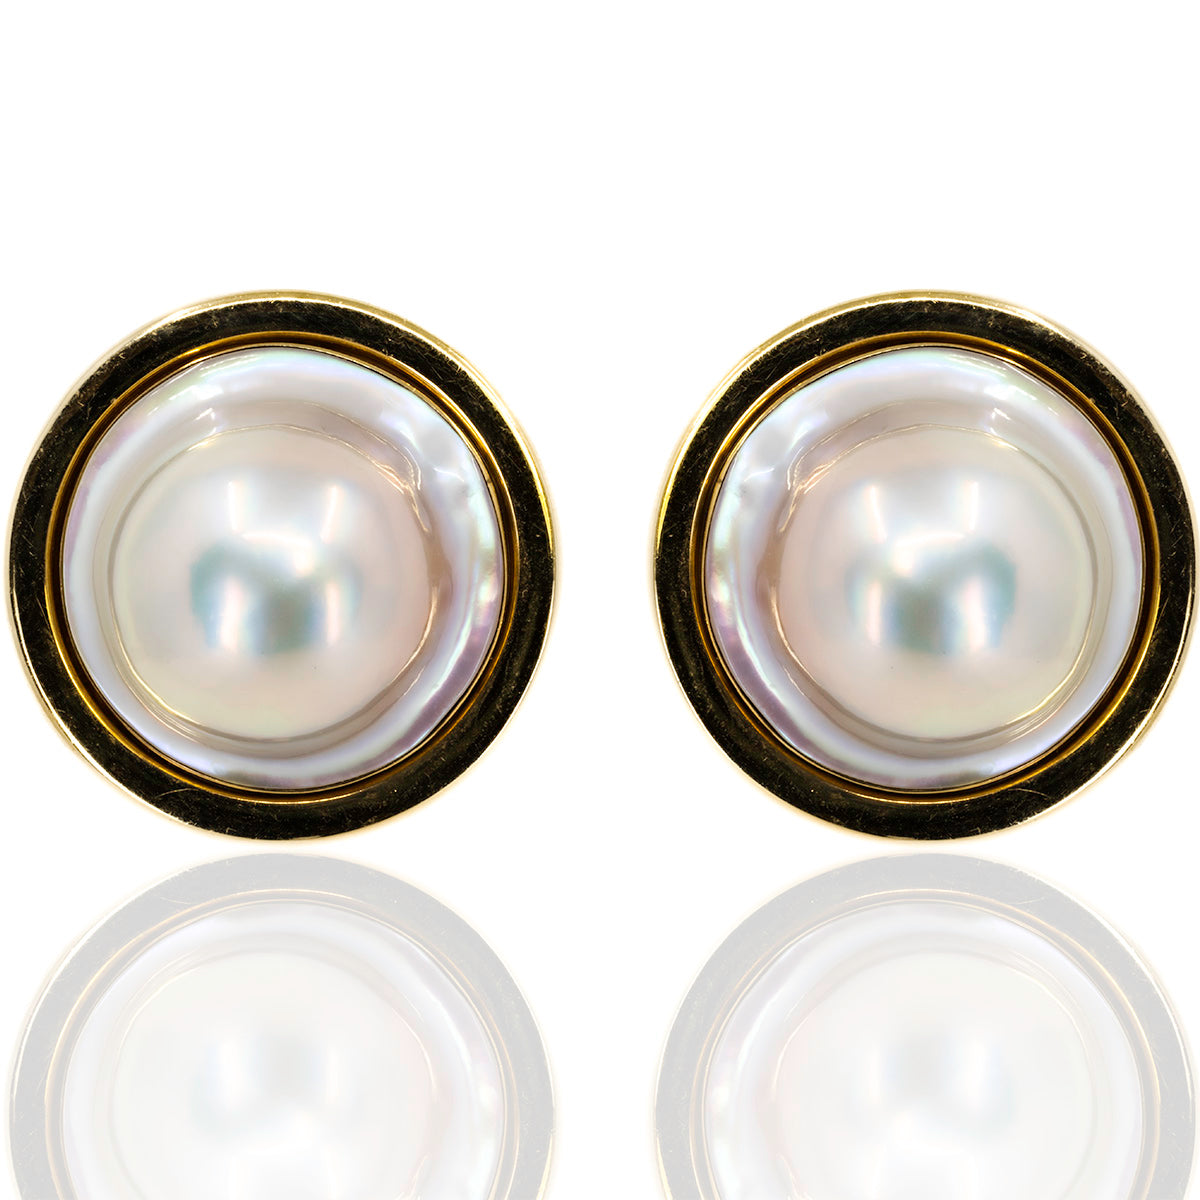 Blister Pearl Earrings